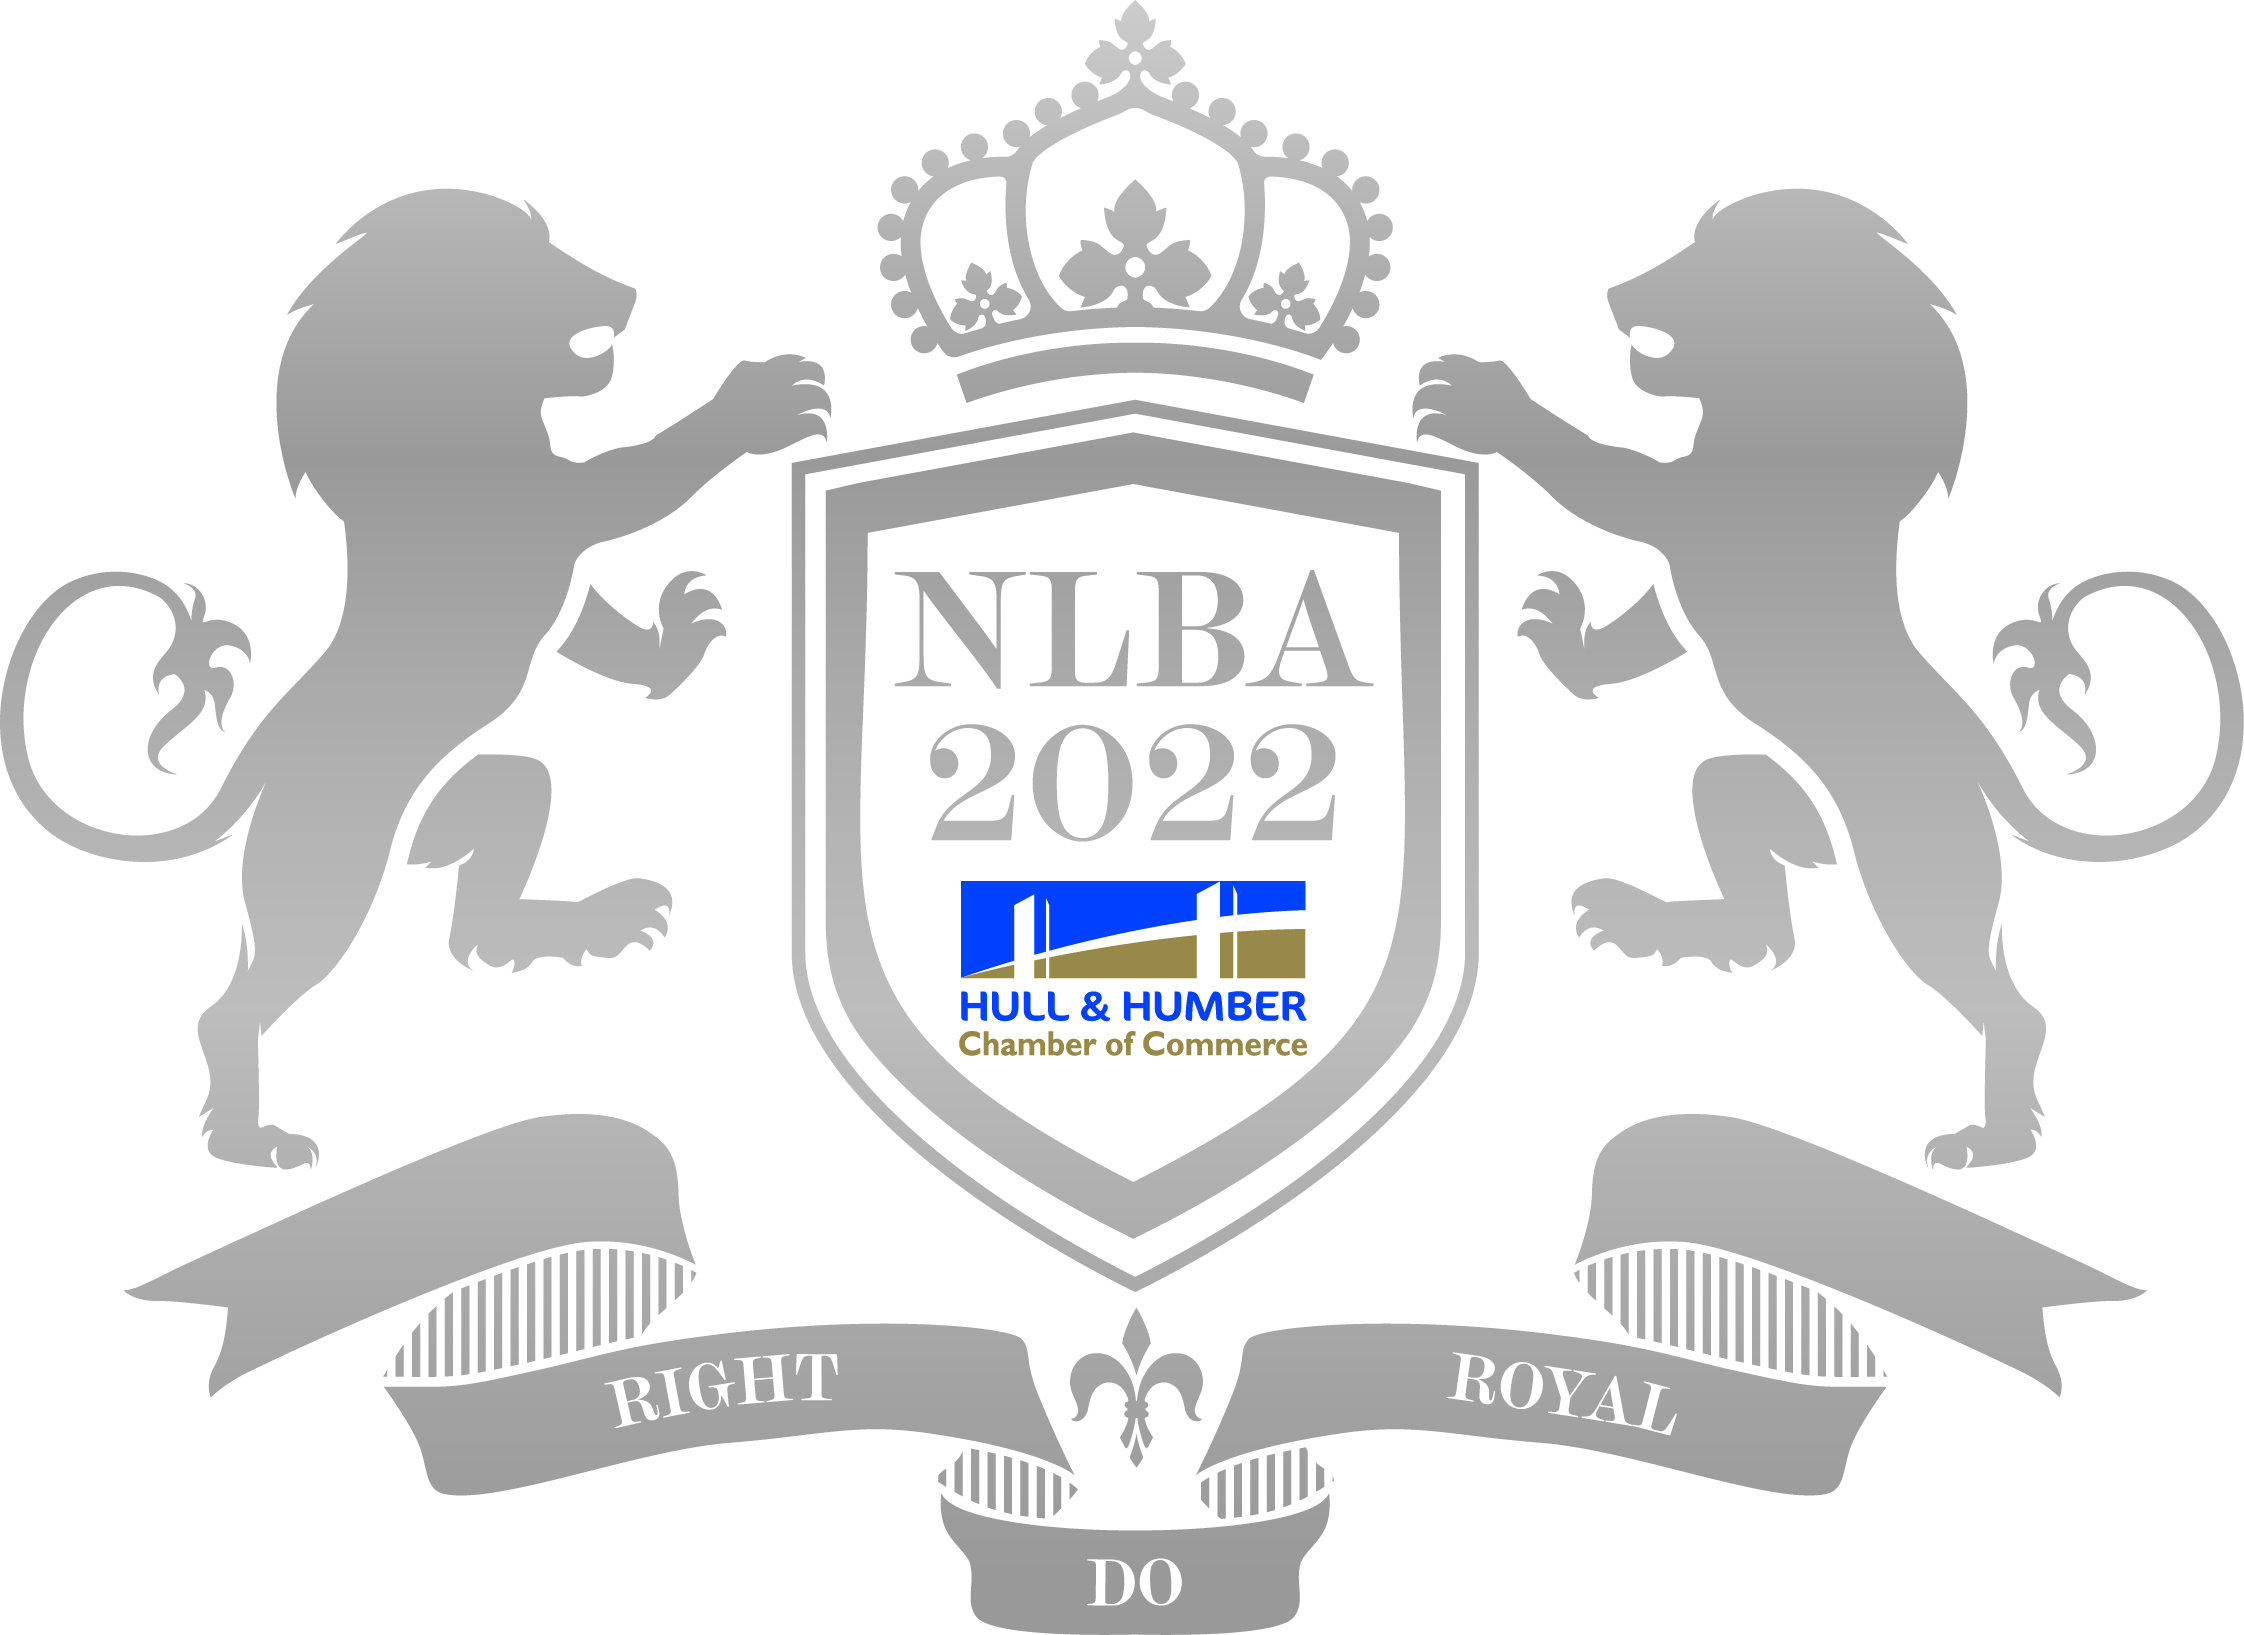 NLBA 2022 Regal Lions logo